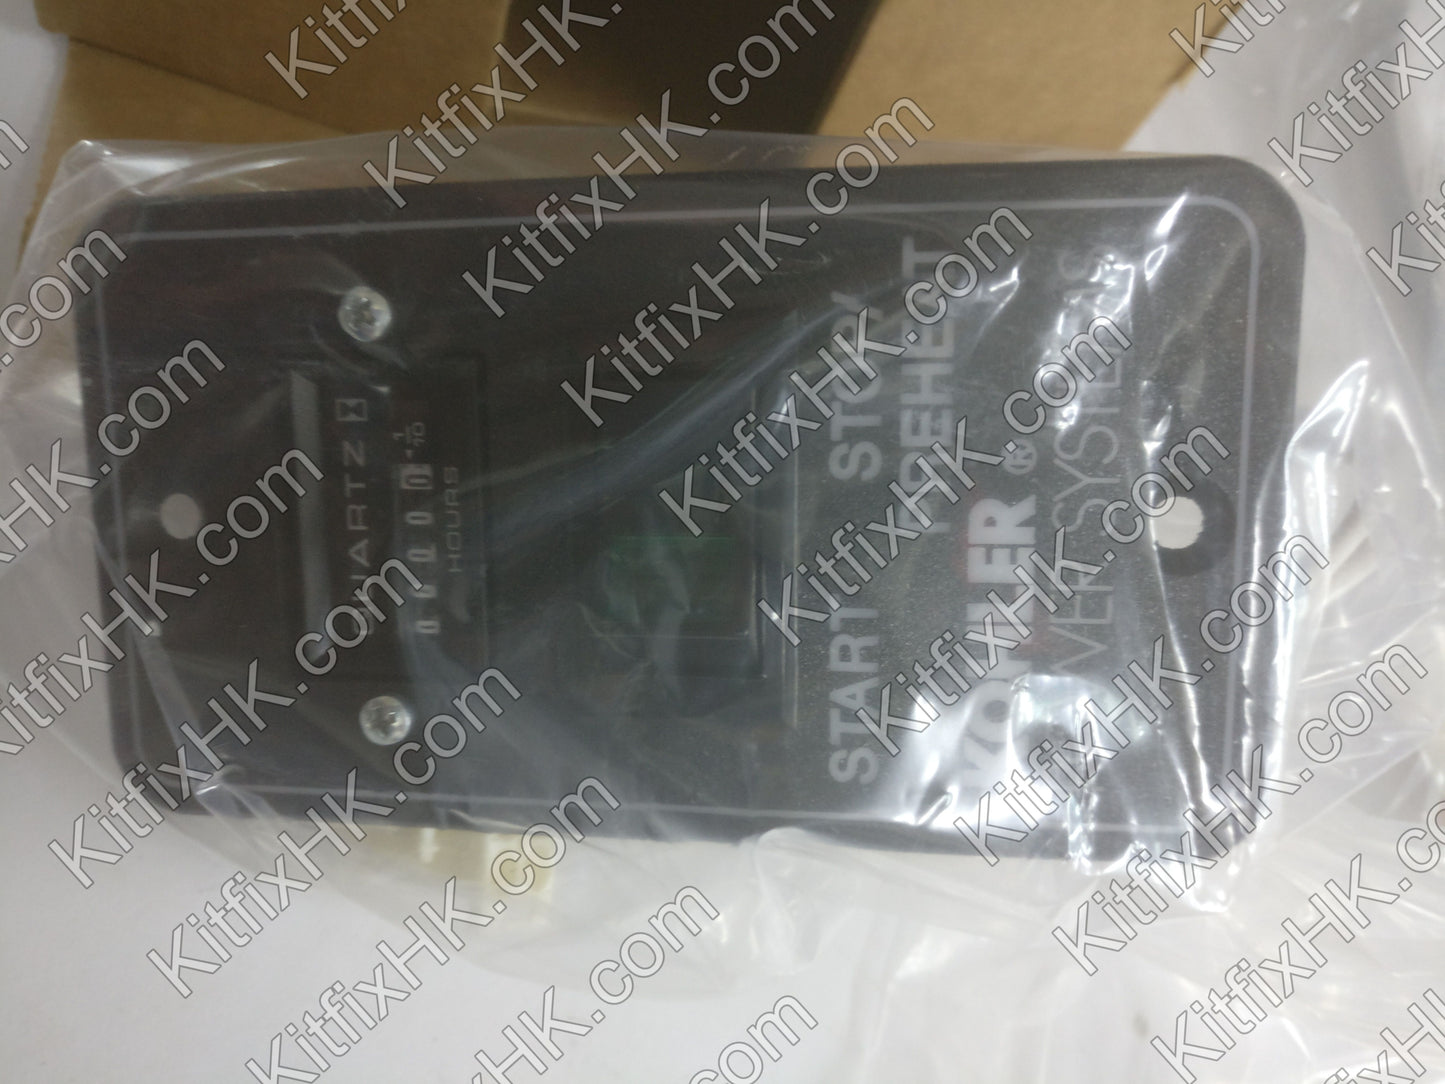 Kohler control panel kit - GM88292-KP1 & GM88294-KP2